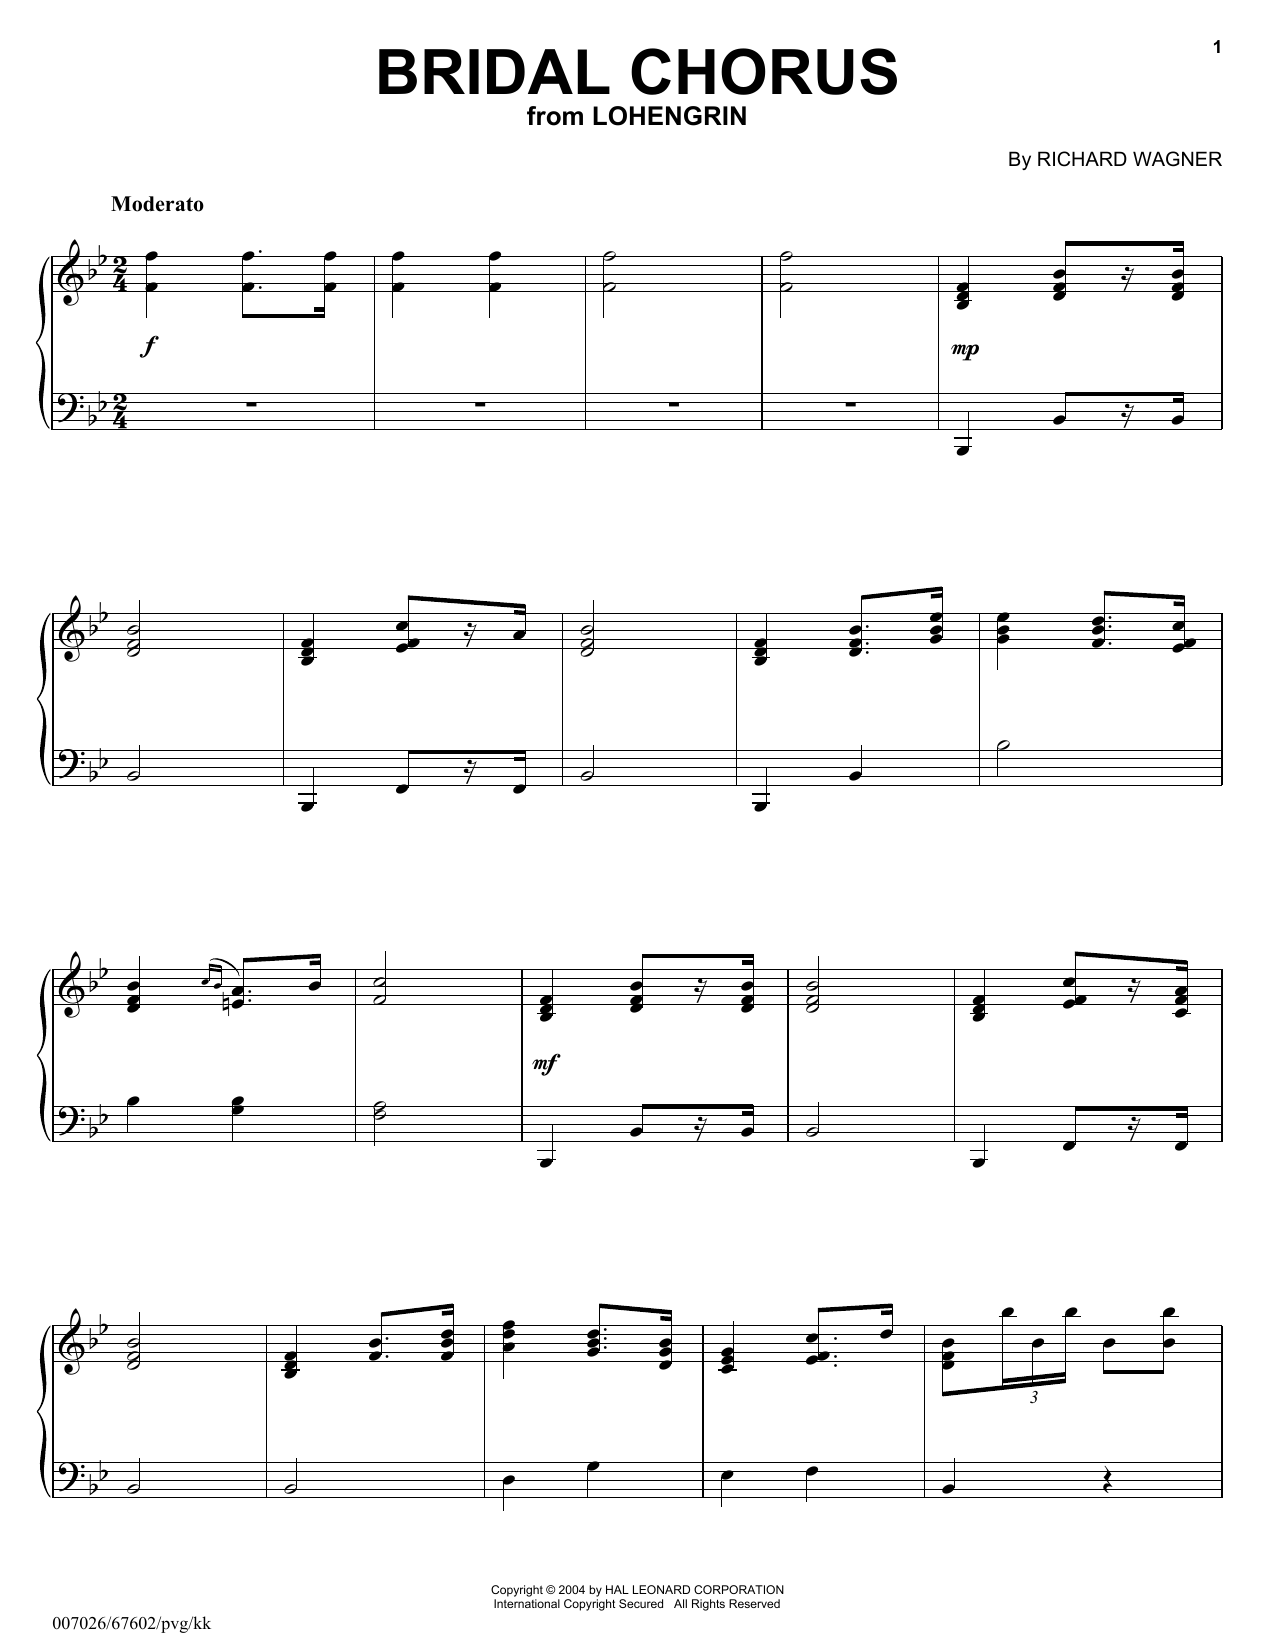 Richard Wagner Bridal Chorus Sheet Music Notes & Chords for Viola - Download or Print PDF